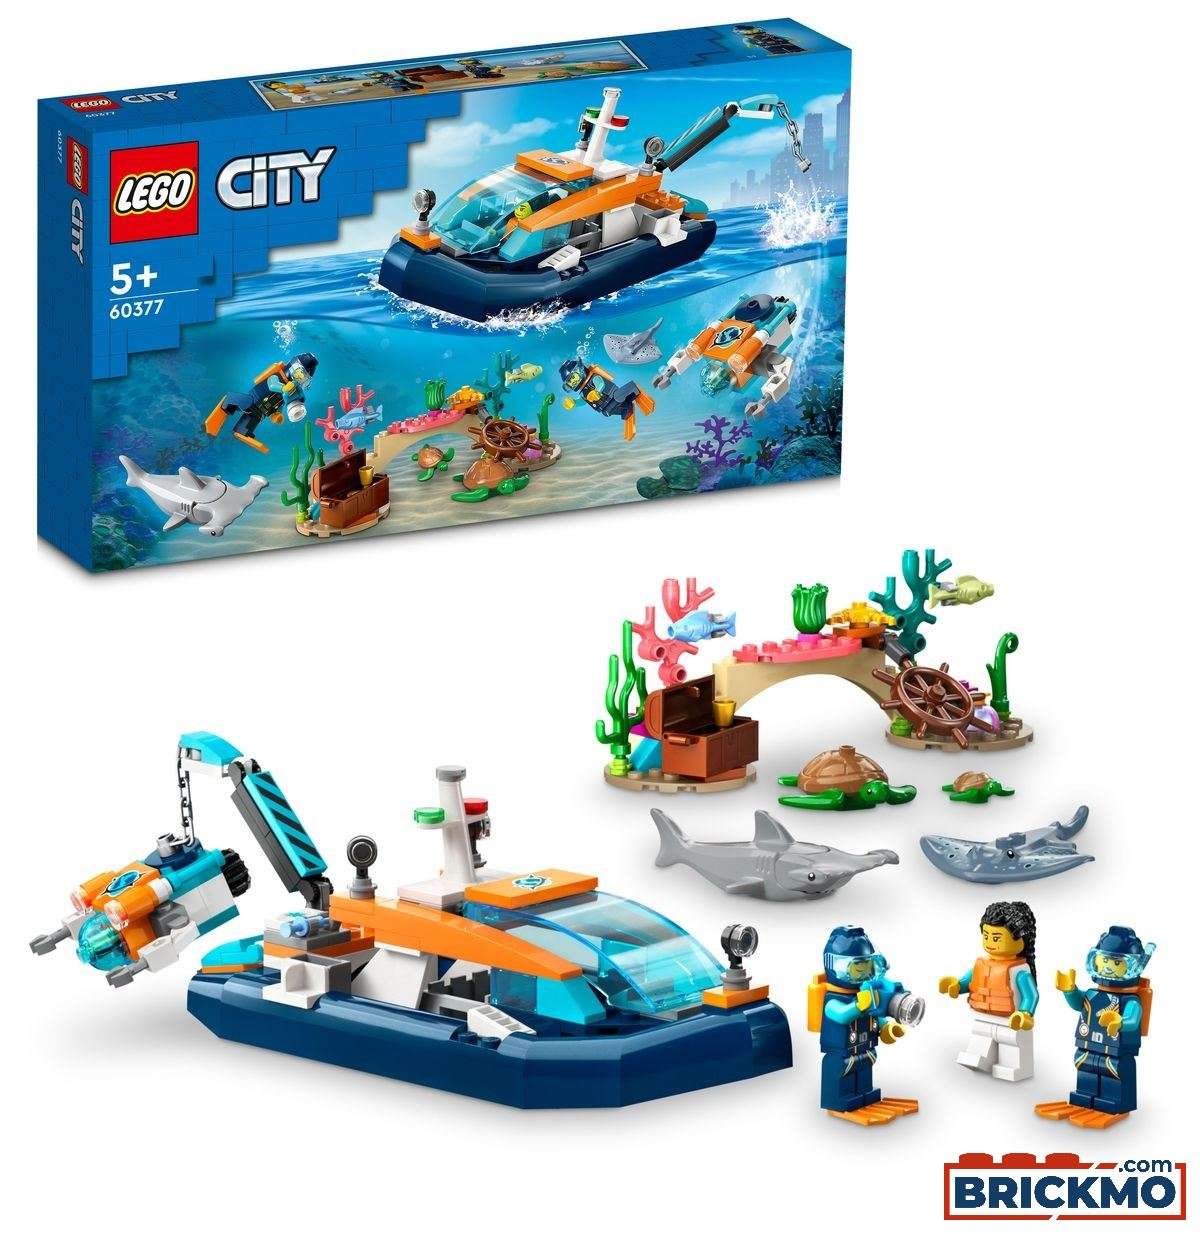 LEGO City 60377 Explorer Diving Boat 60377